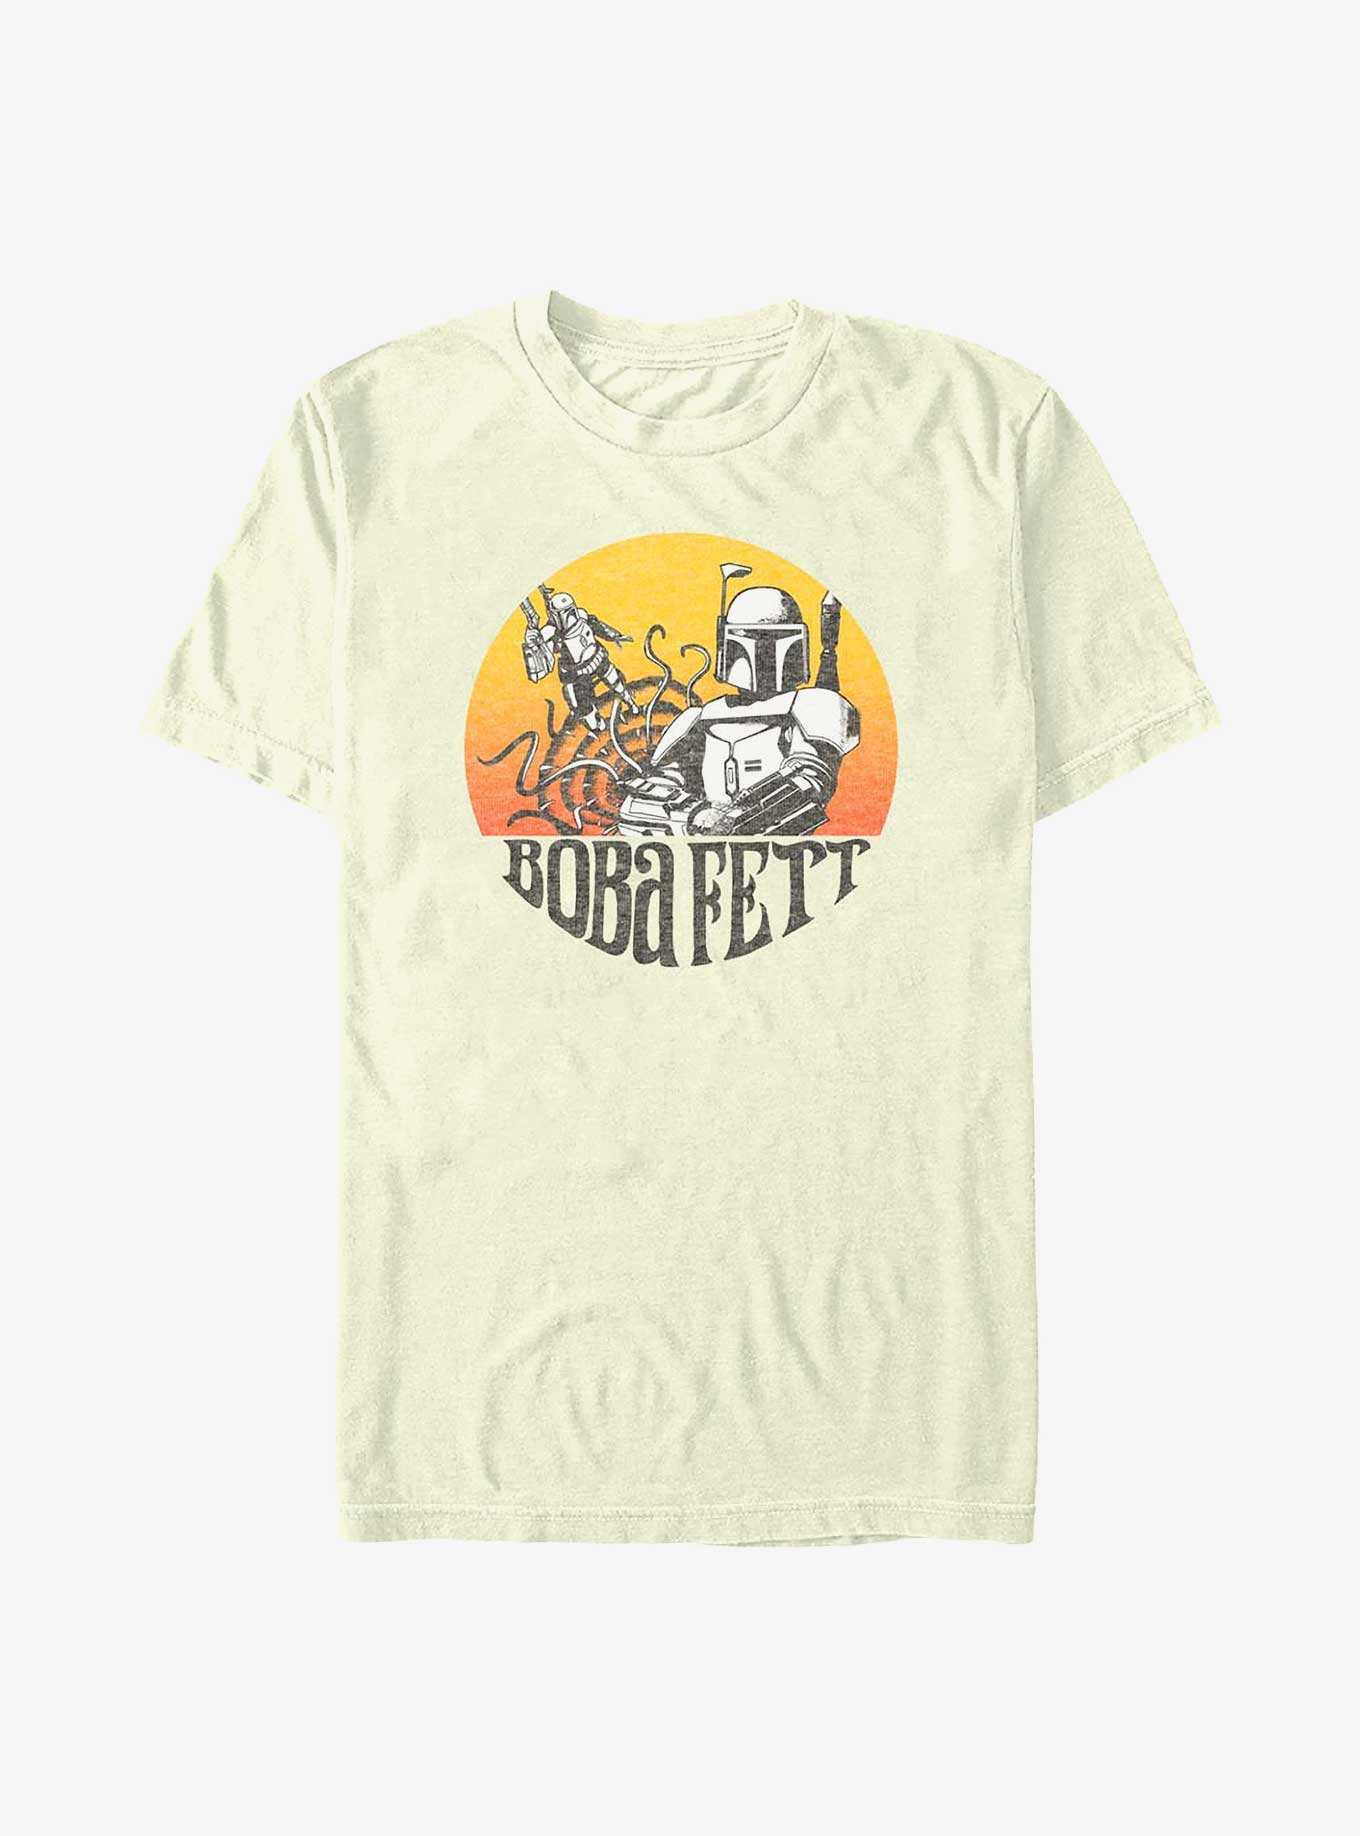 Star Wars Boba Fett T-Shirt, , hi-res